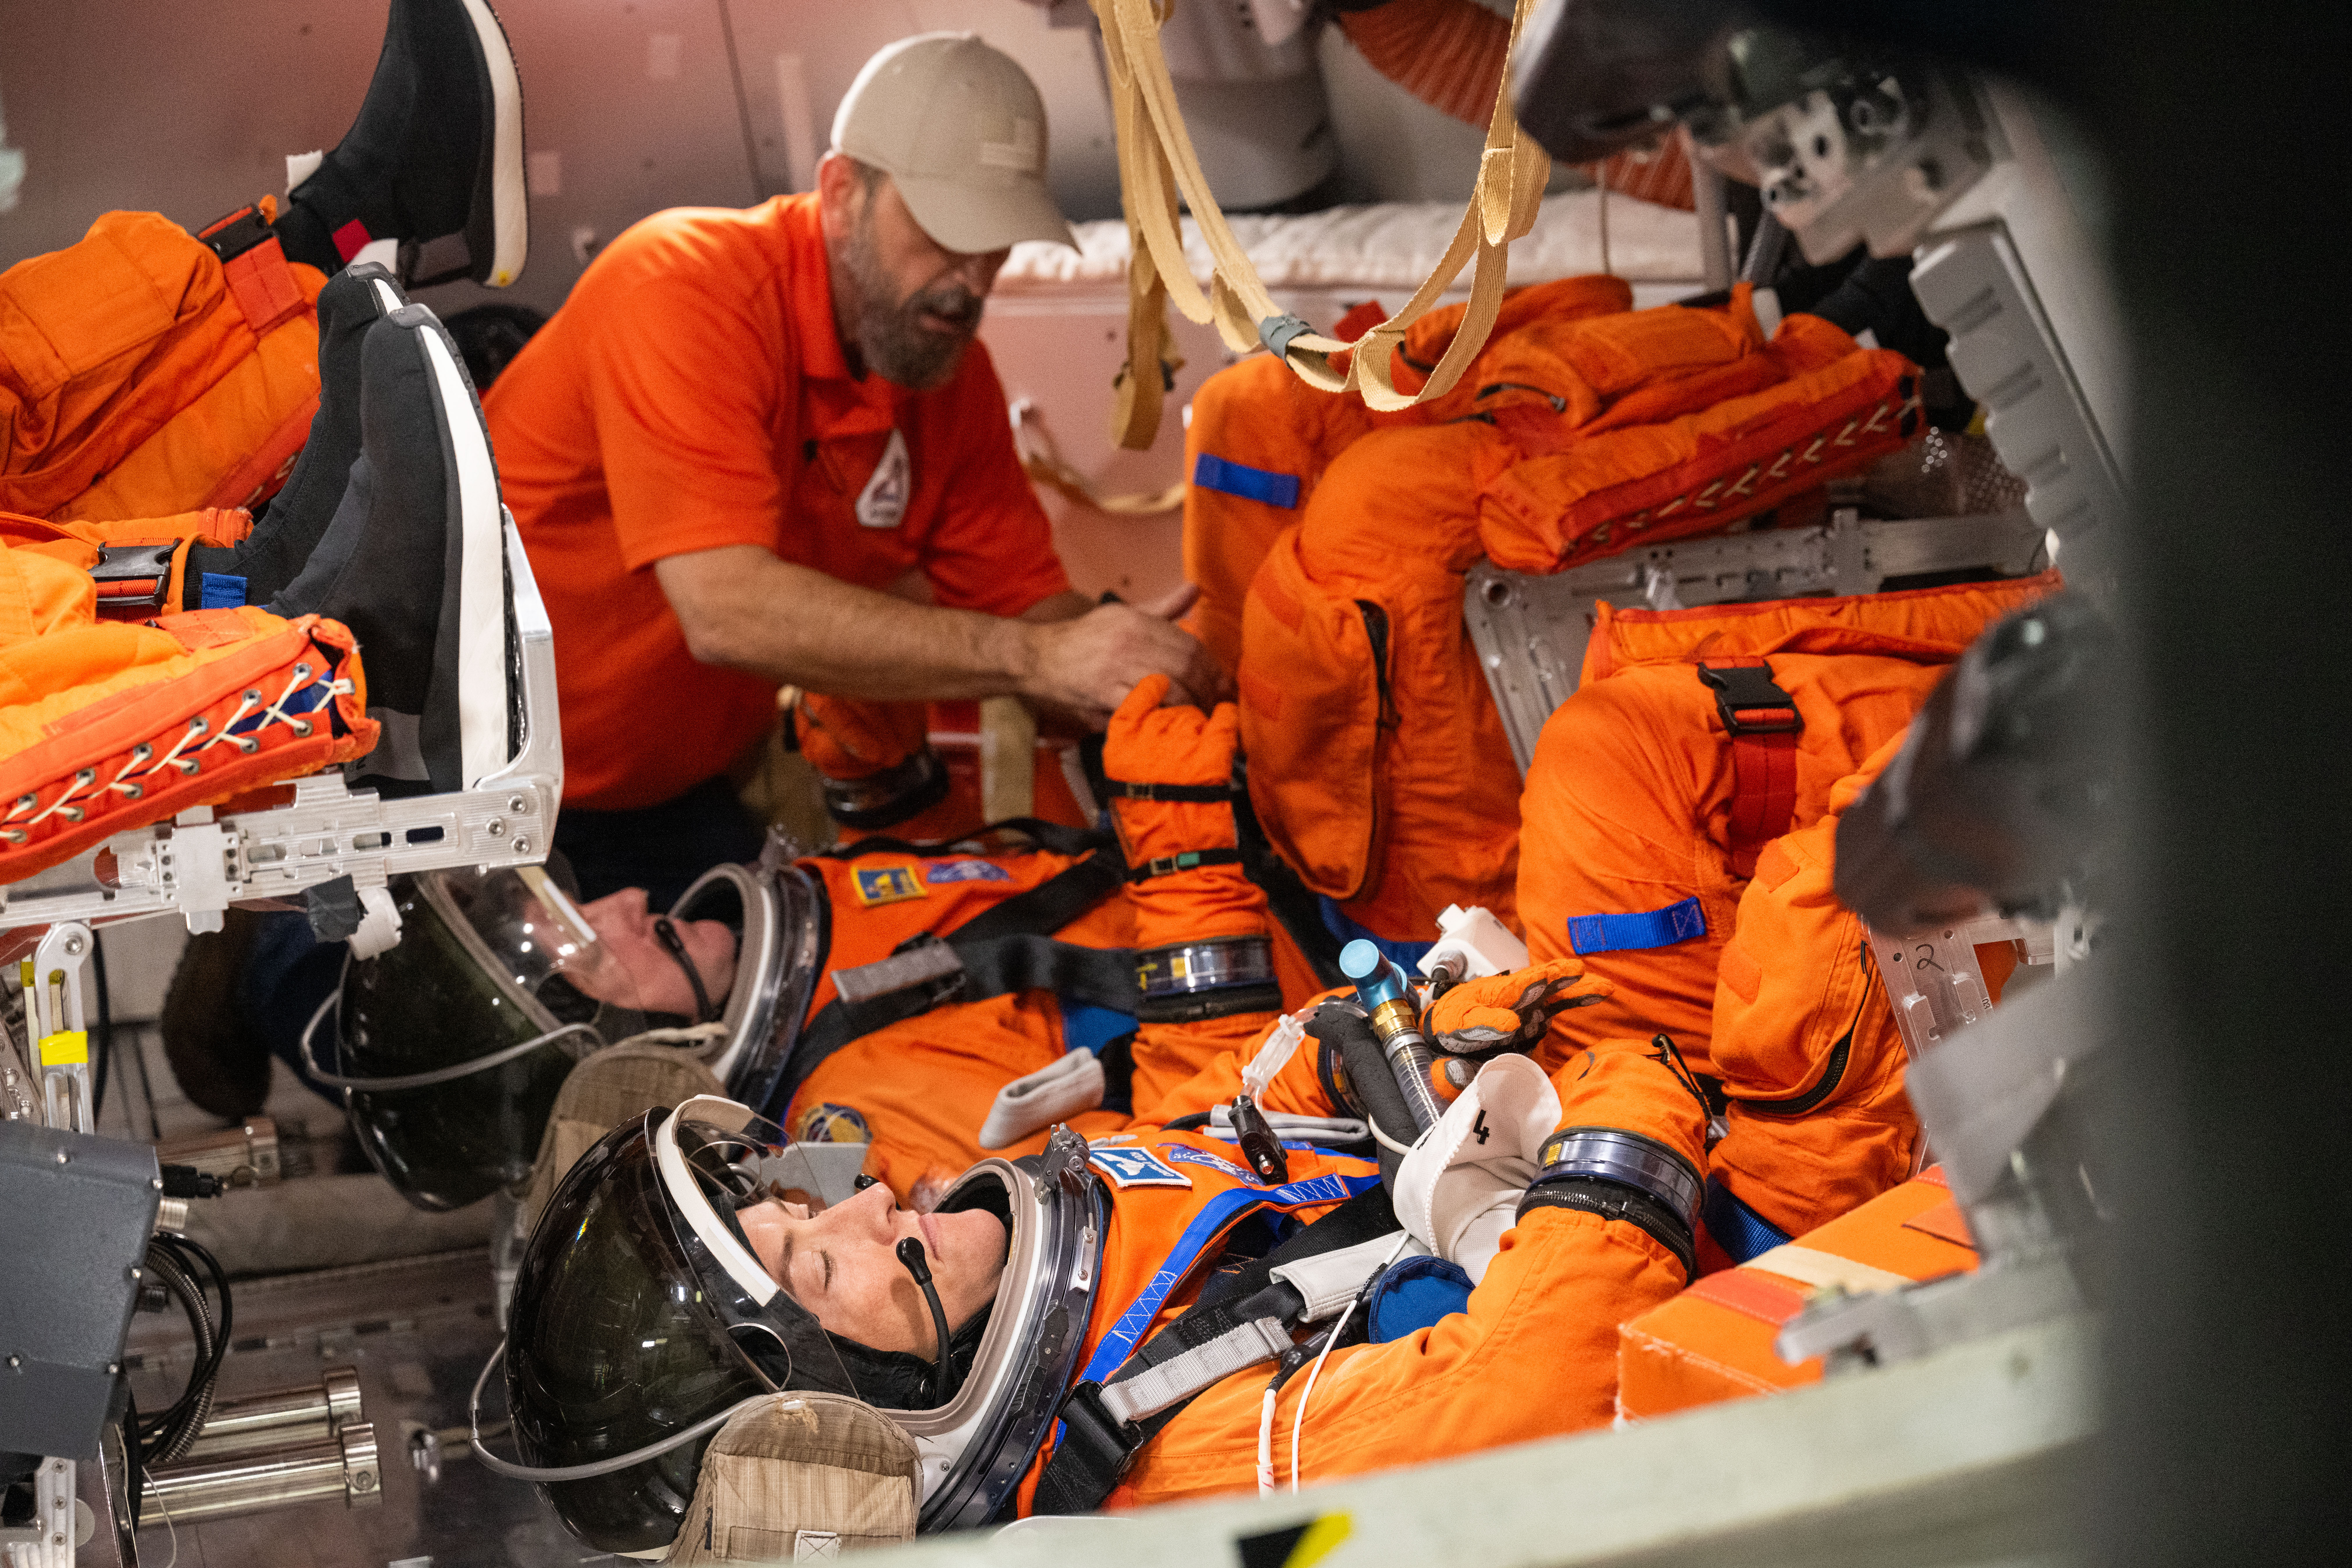 Artemis II Crew Trains for Emergency Scenarios Ahead of Moon Mission